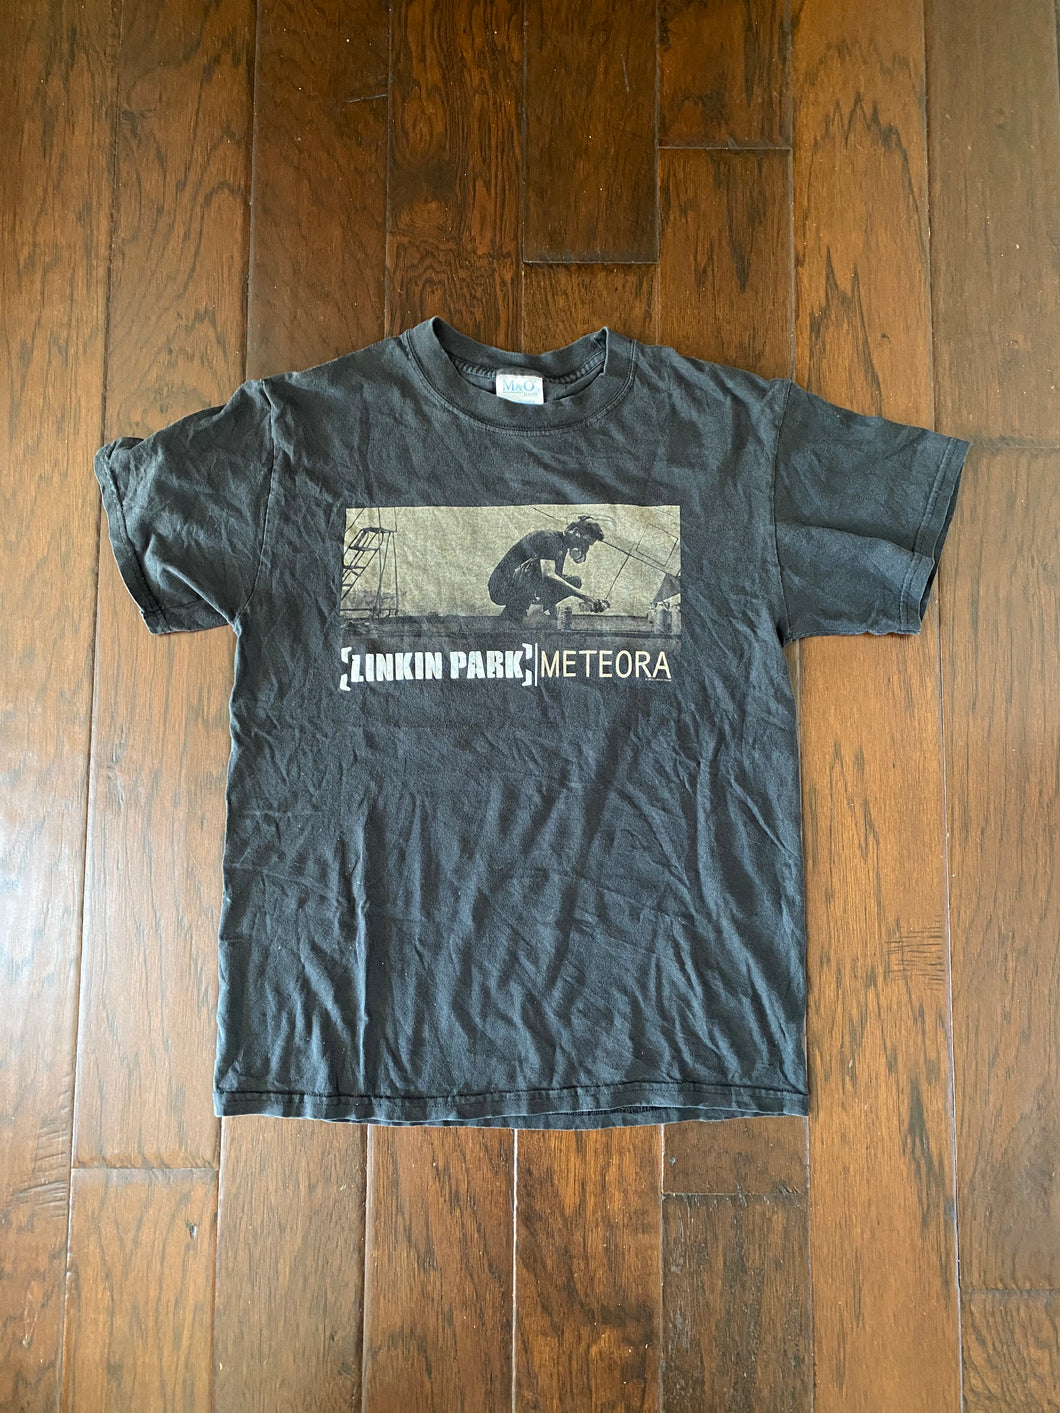 Linkin Park “Meteora Worldwide Tour 2004” Vintage Distressed T-shirt